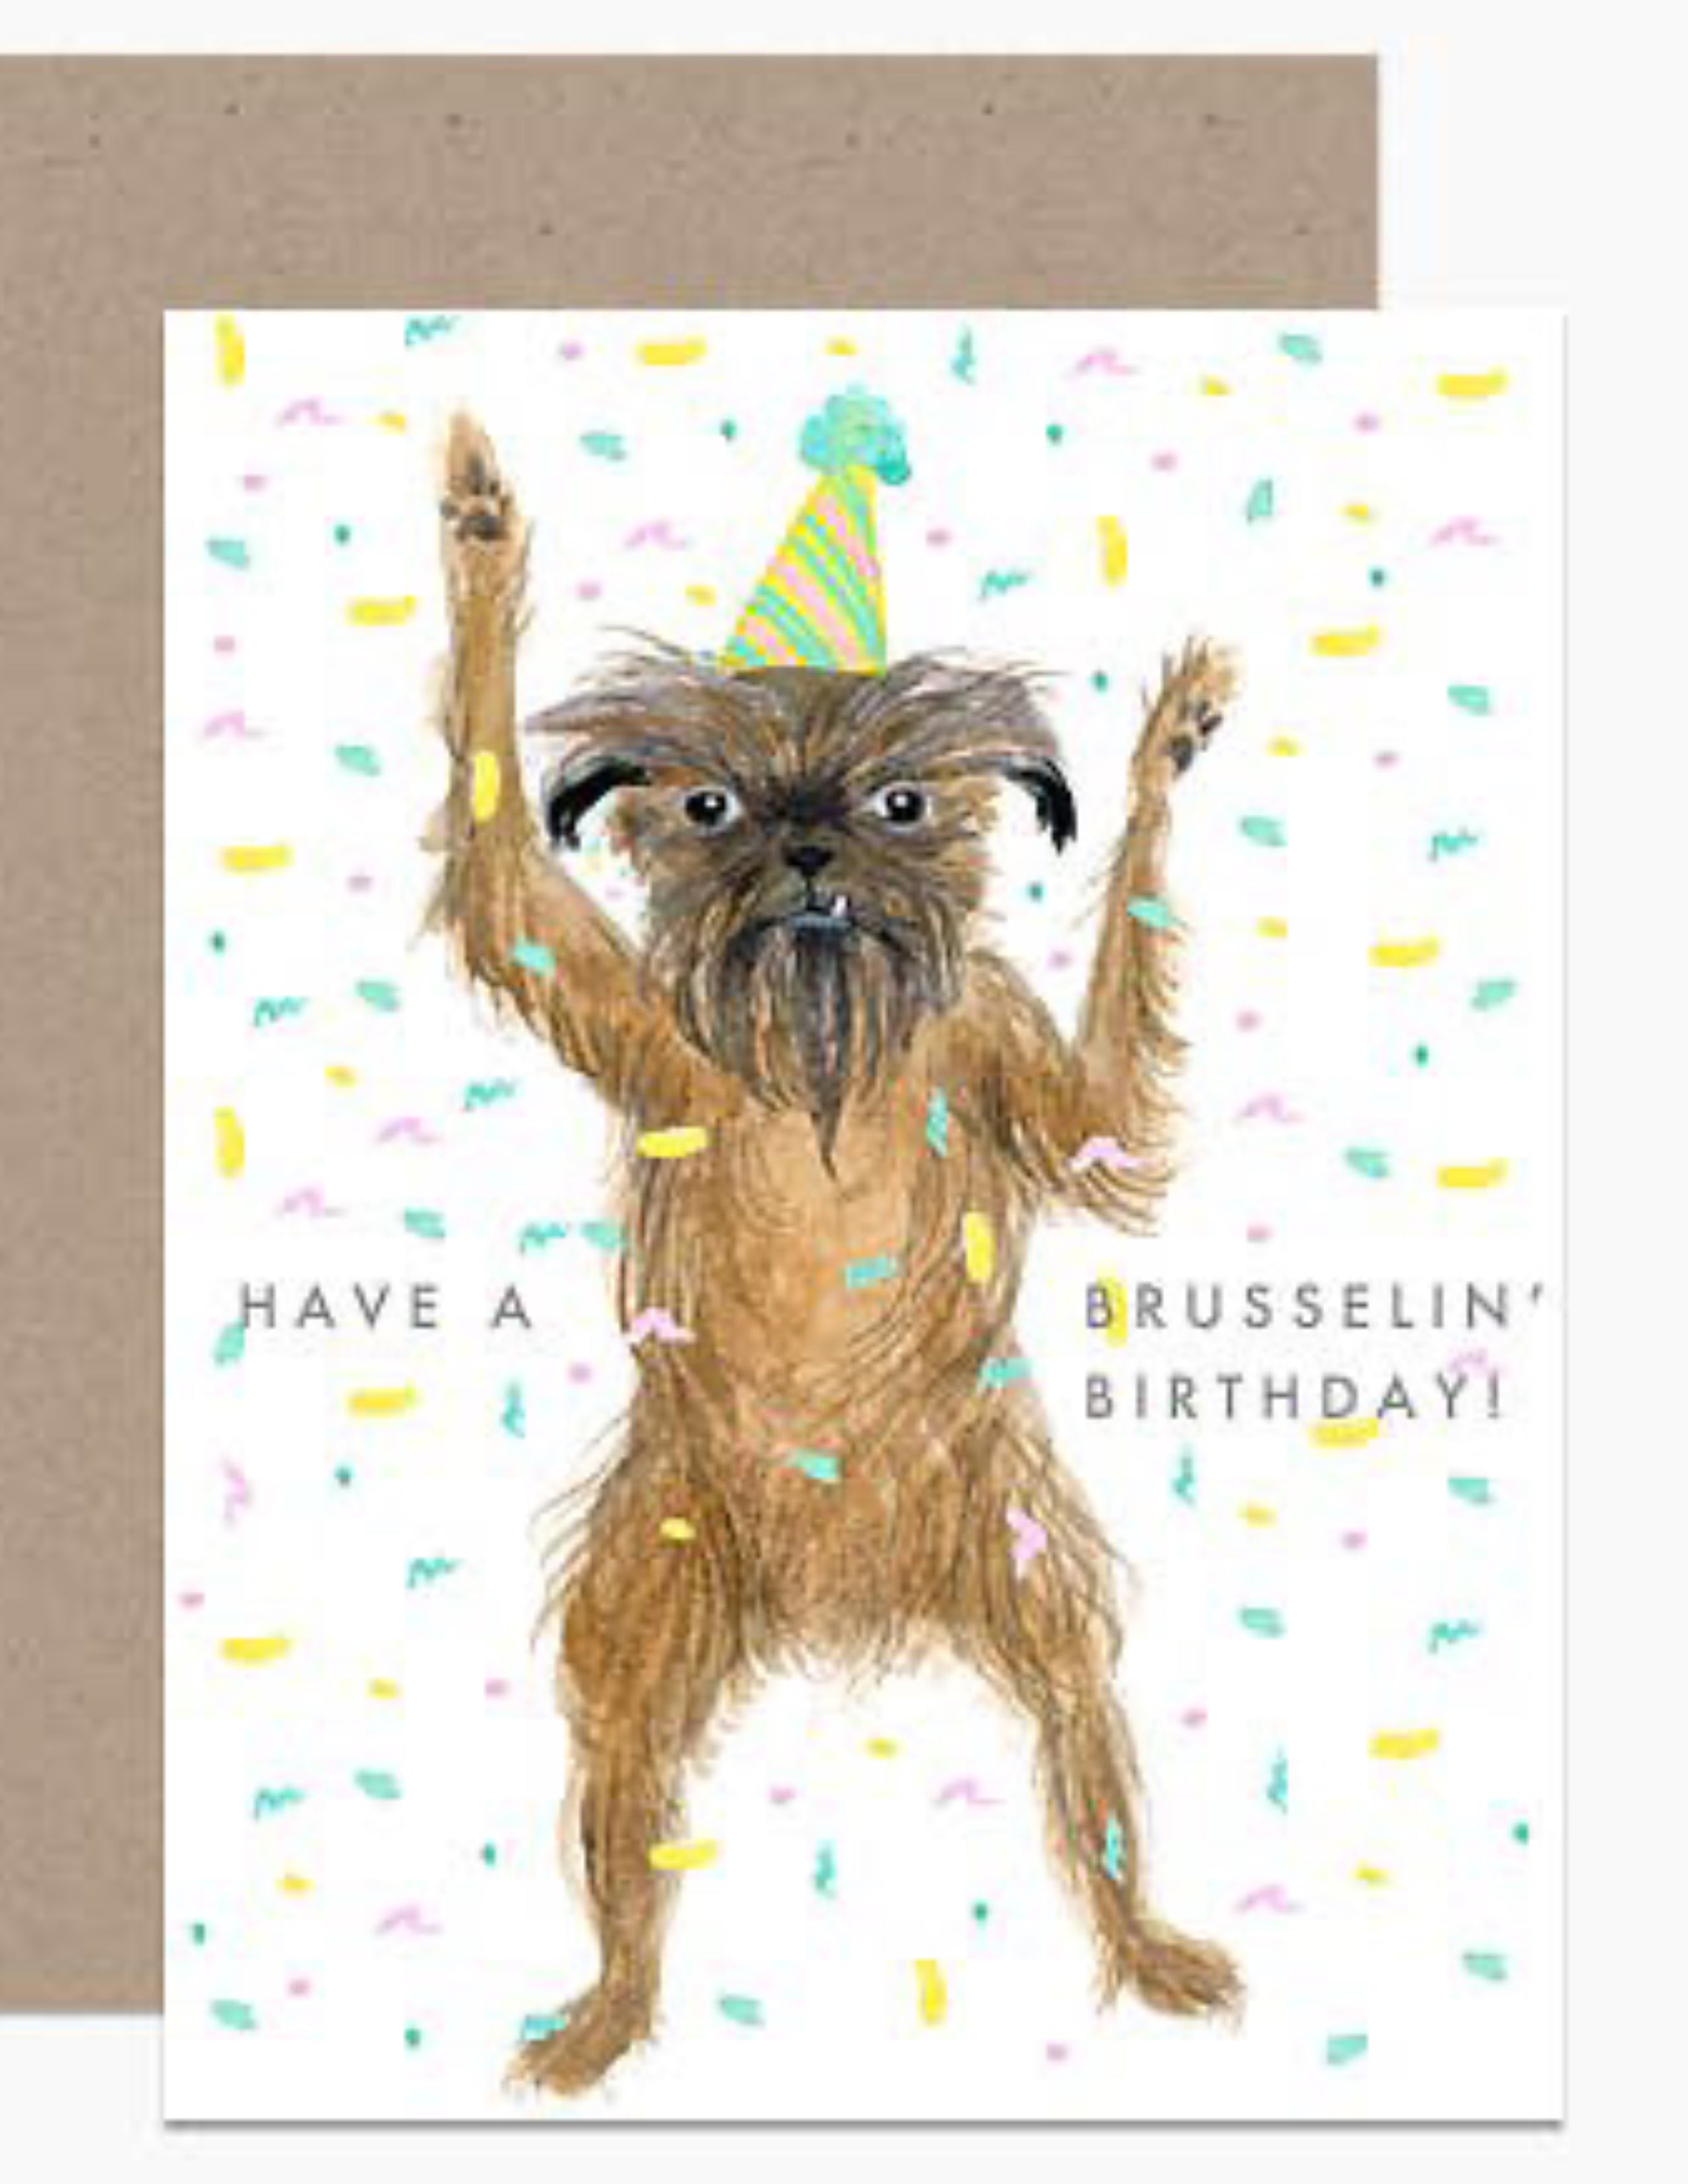 Brussels' Birthday Card